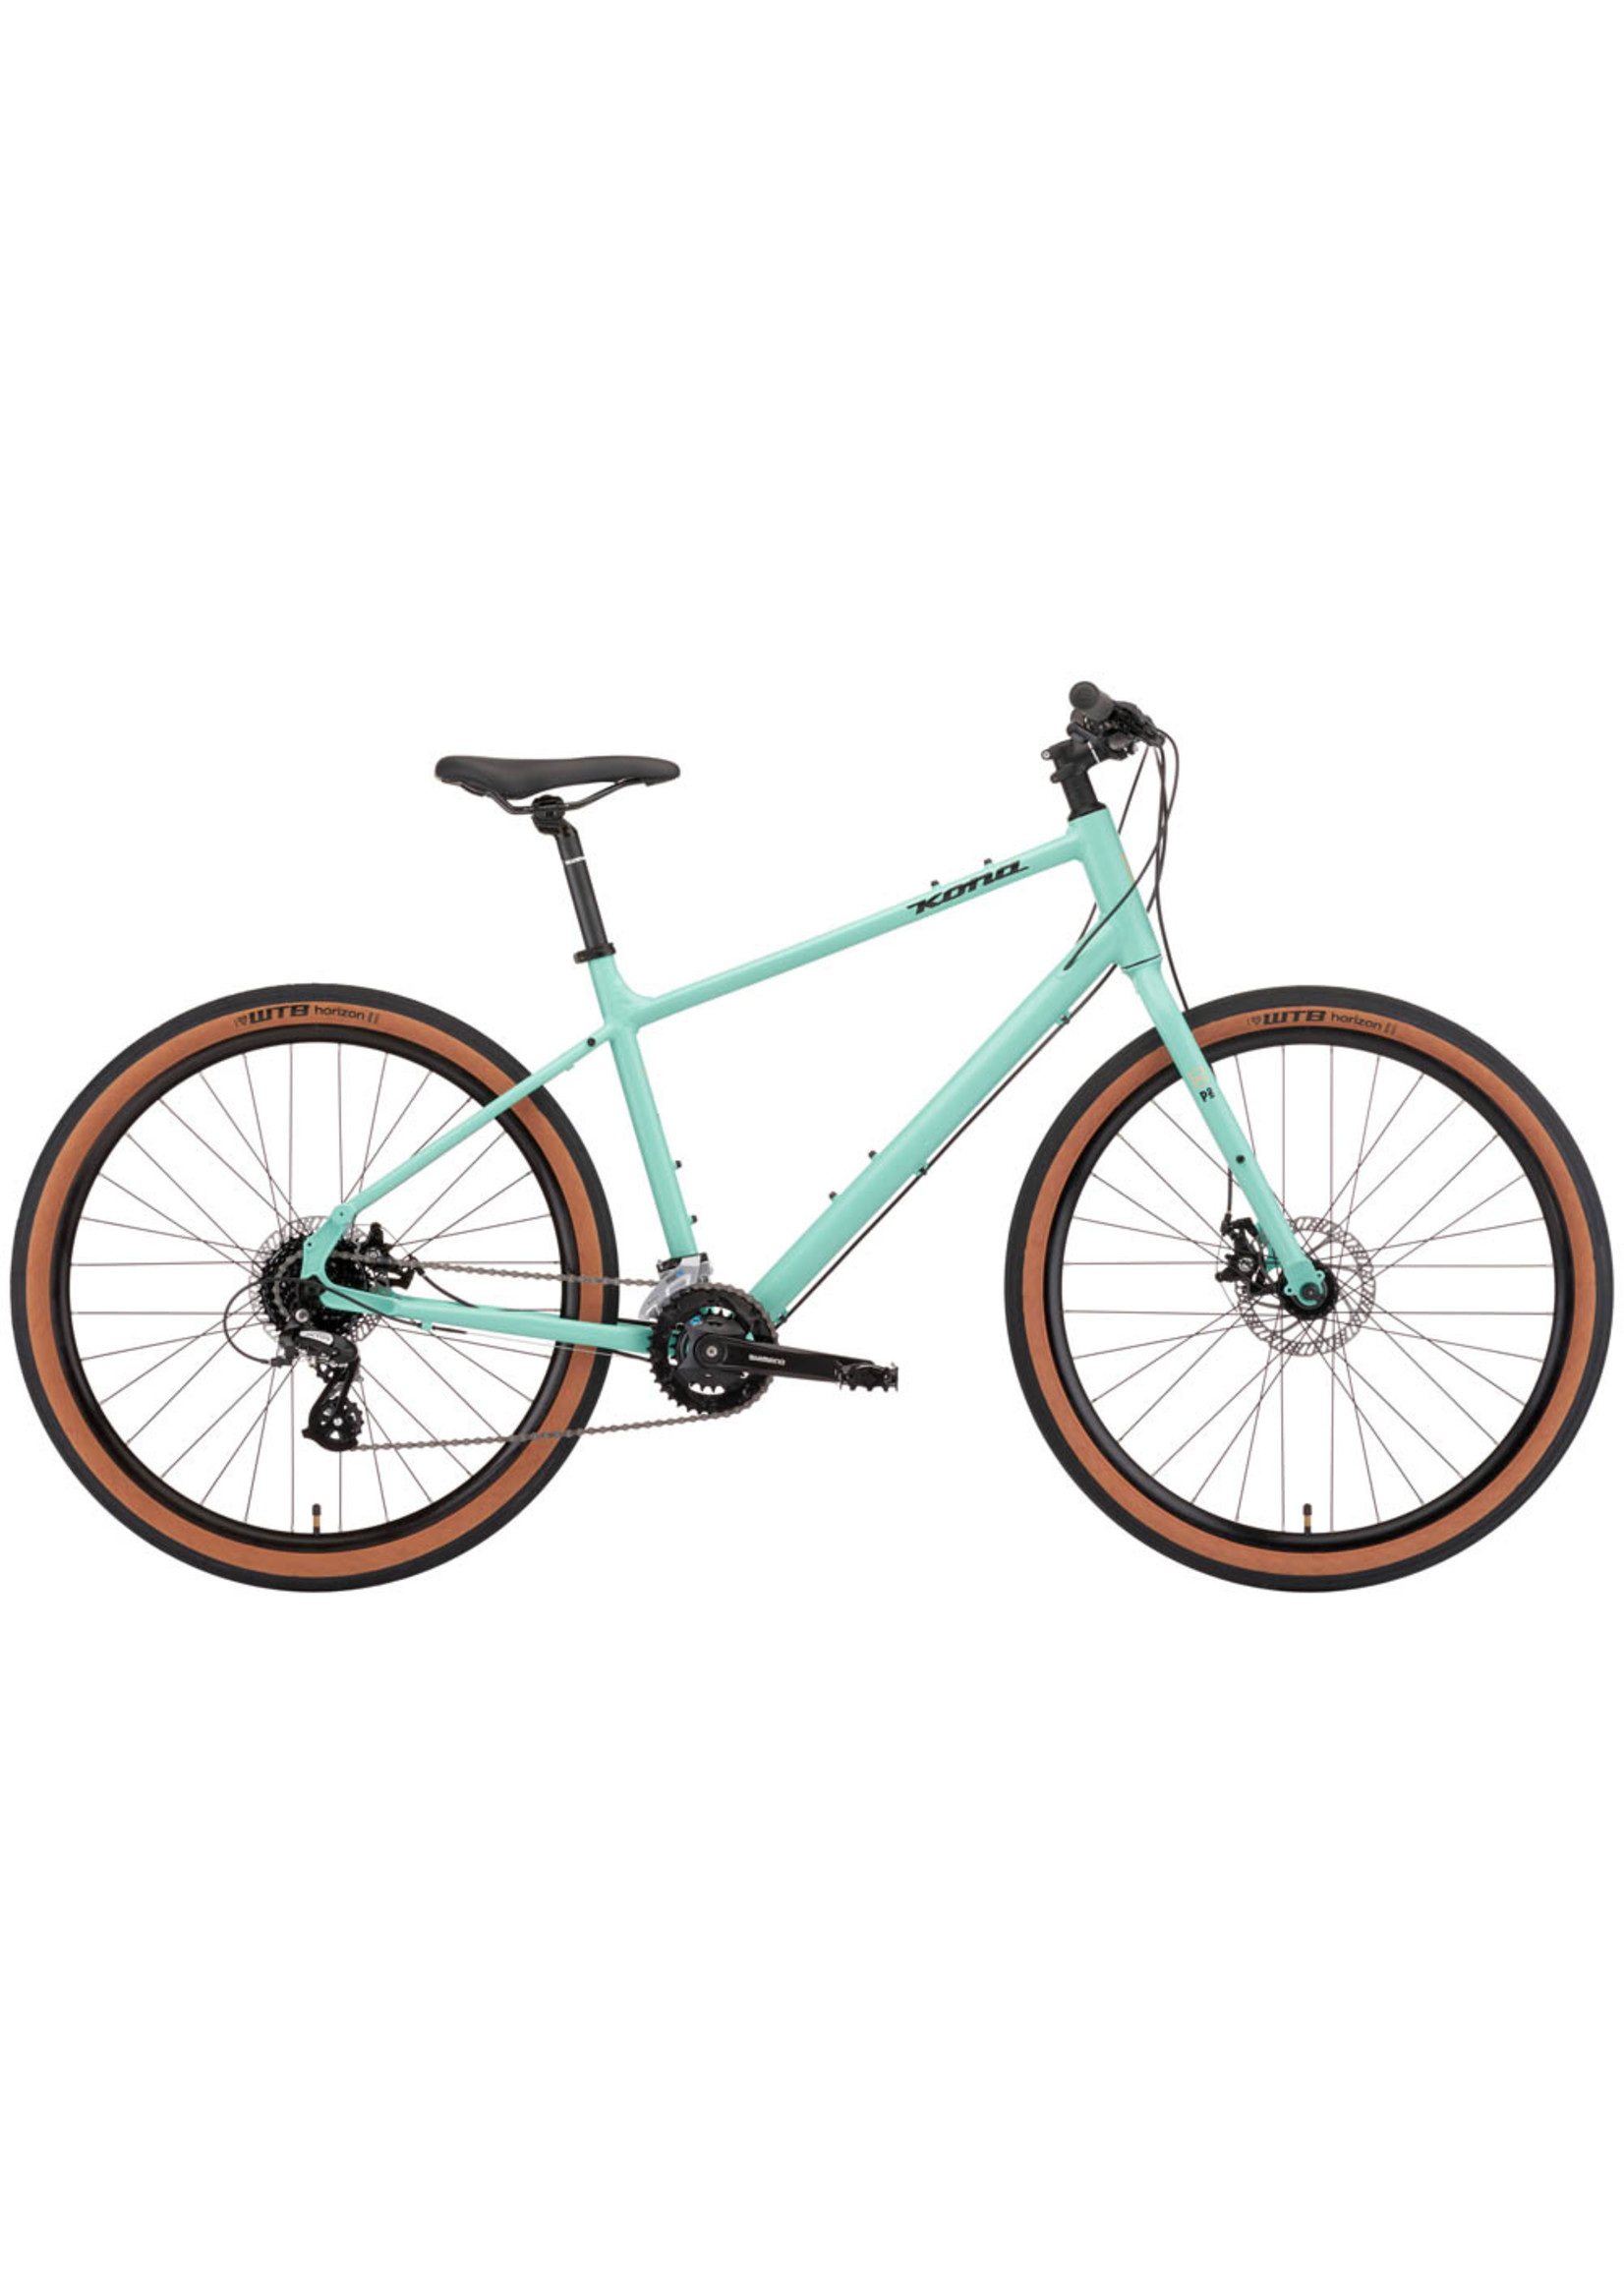 Kona Bicycle Company Dew Mint Green LG